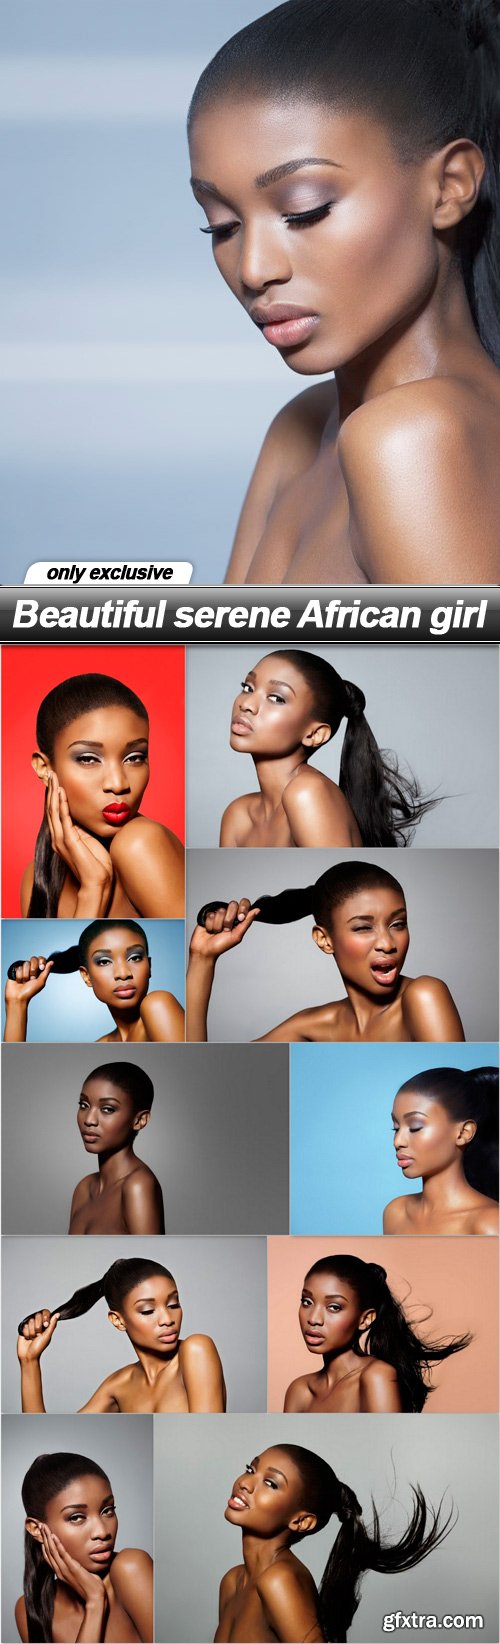 Beautiful serene African girl - 11 UHQ JPEG